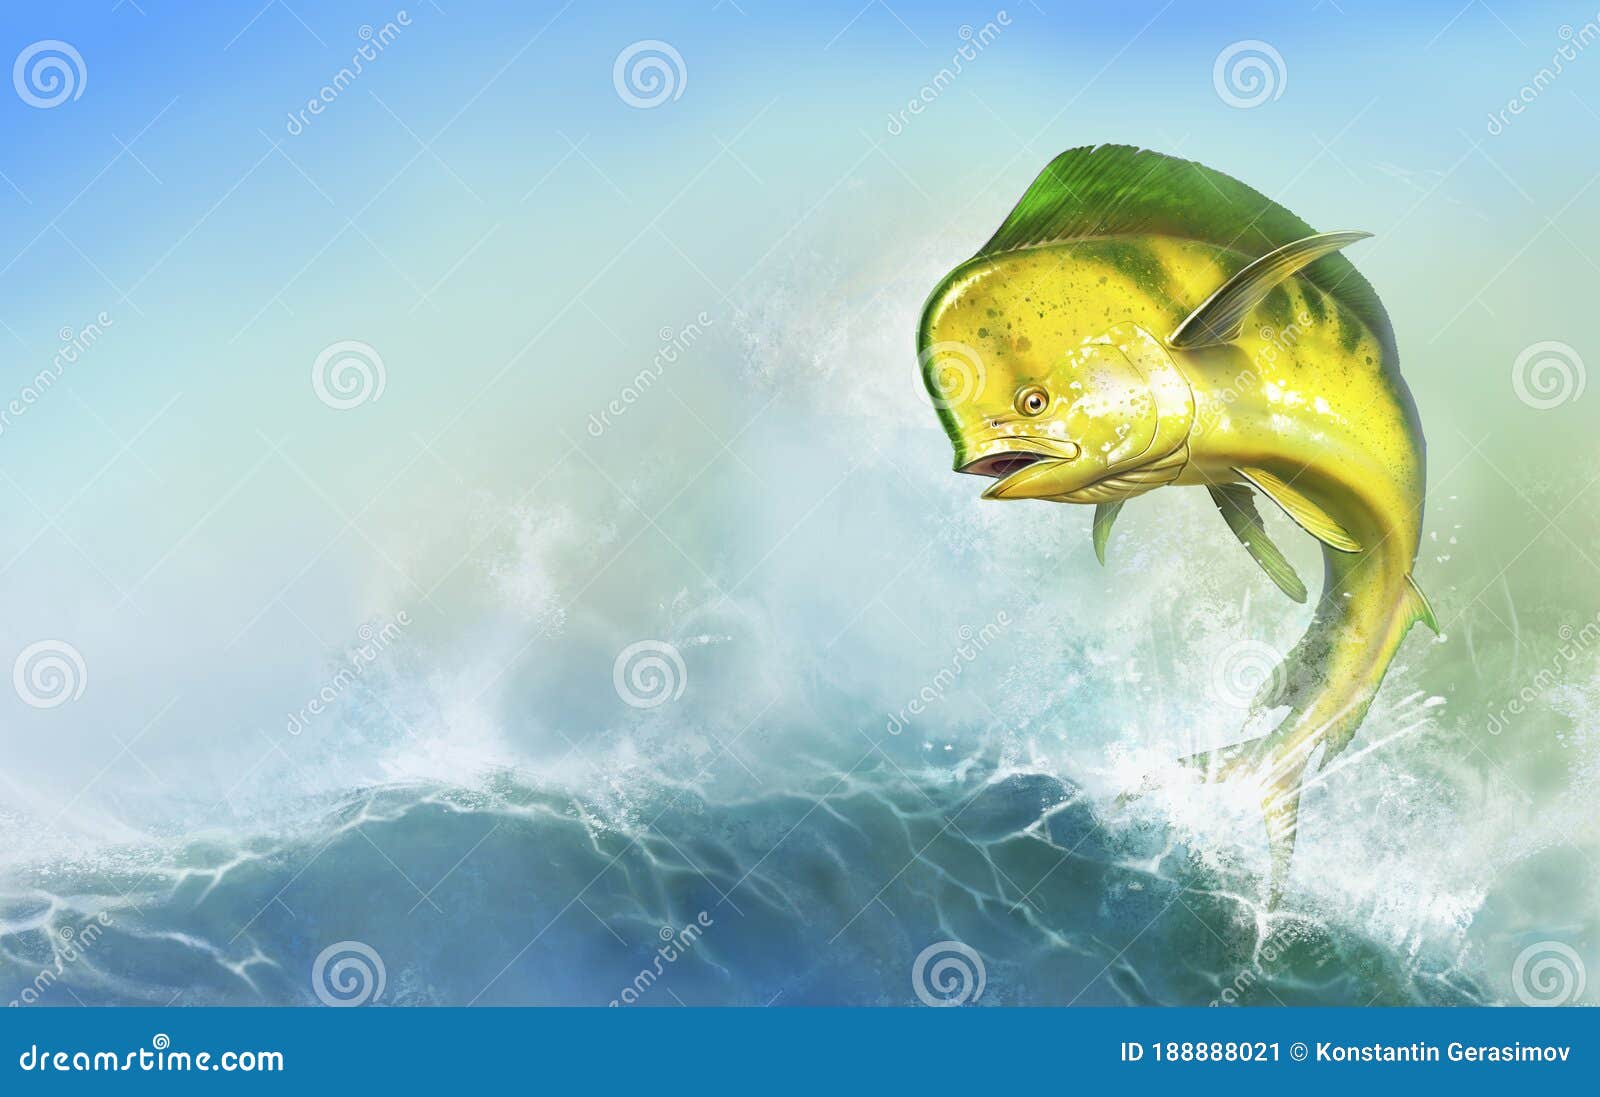 mahi mahi yellow or dolphin fish on sea wave. big dorado fish yellow-green realistic background 